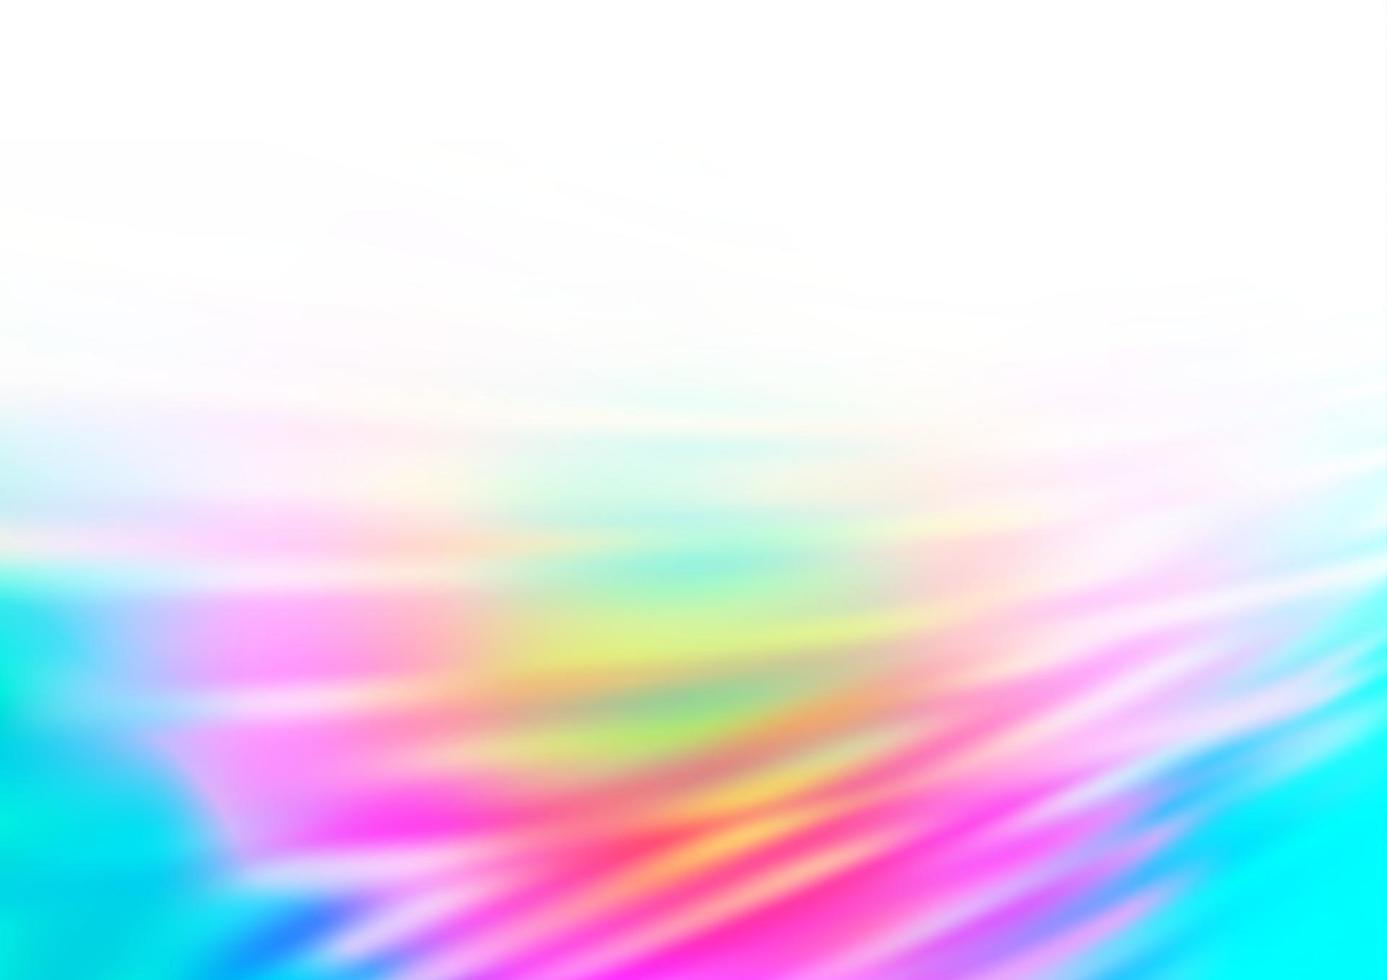 Light Multicolor, Rainbow vector modern elegant background.